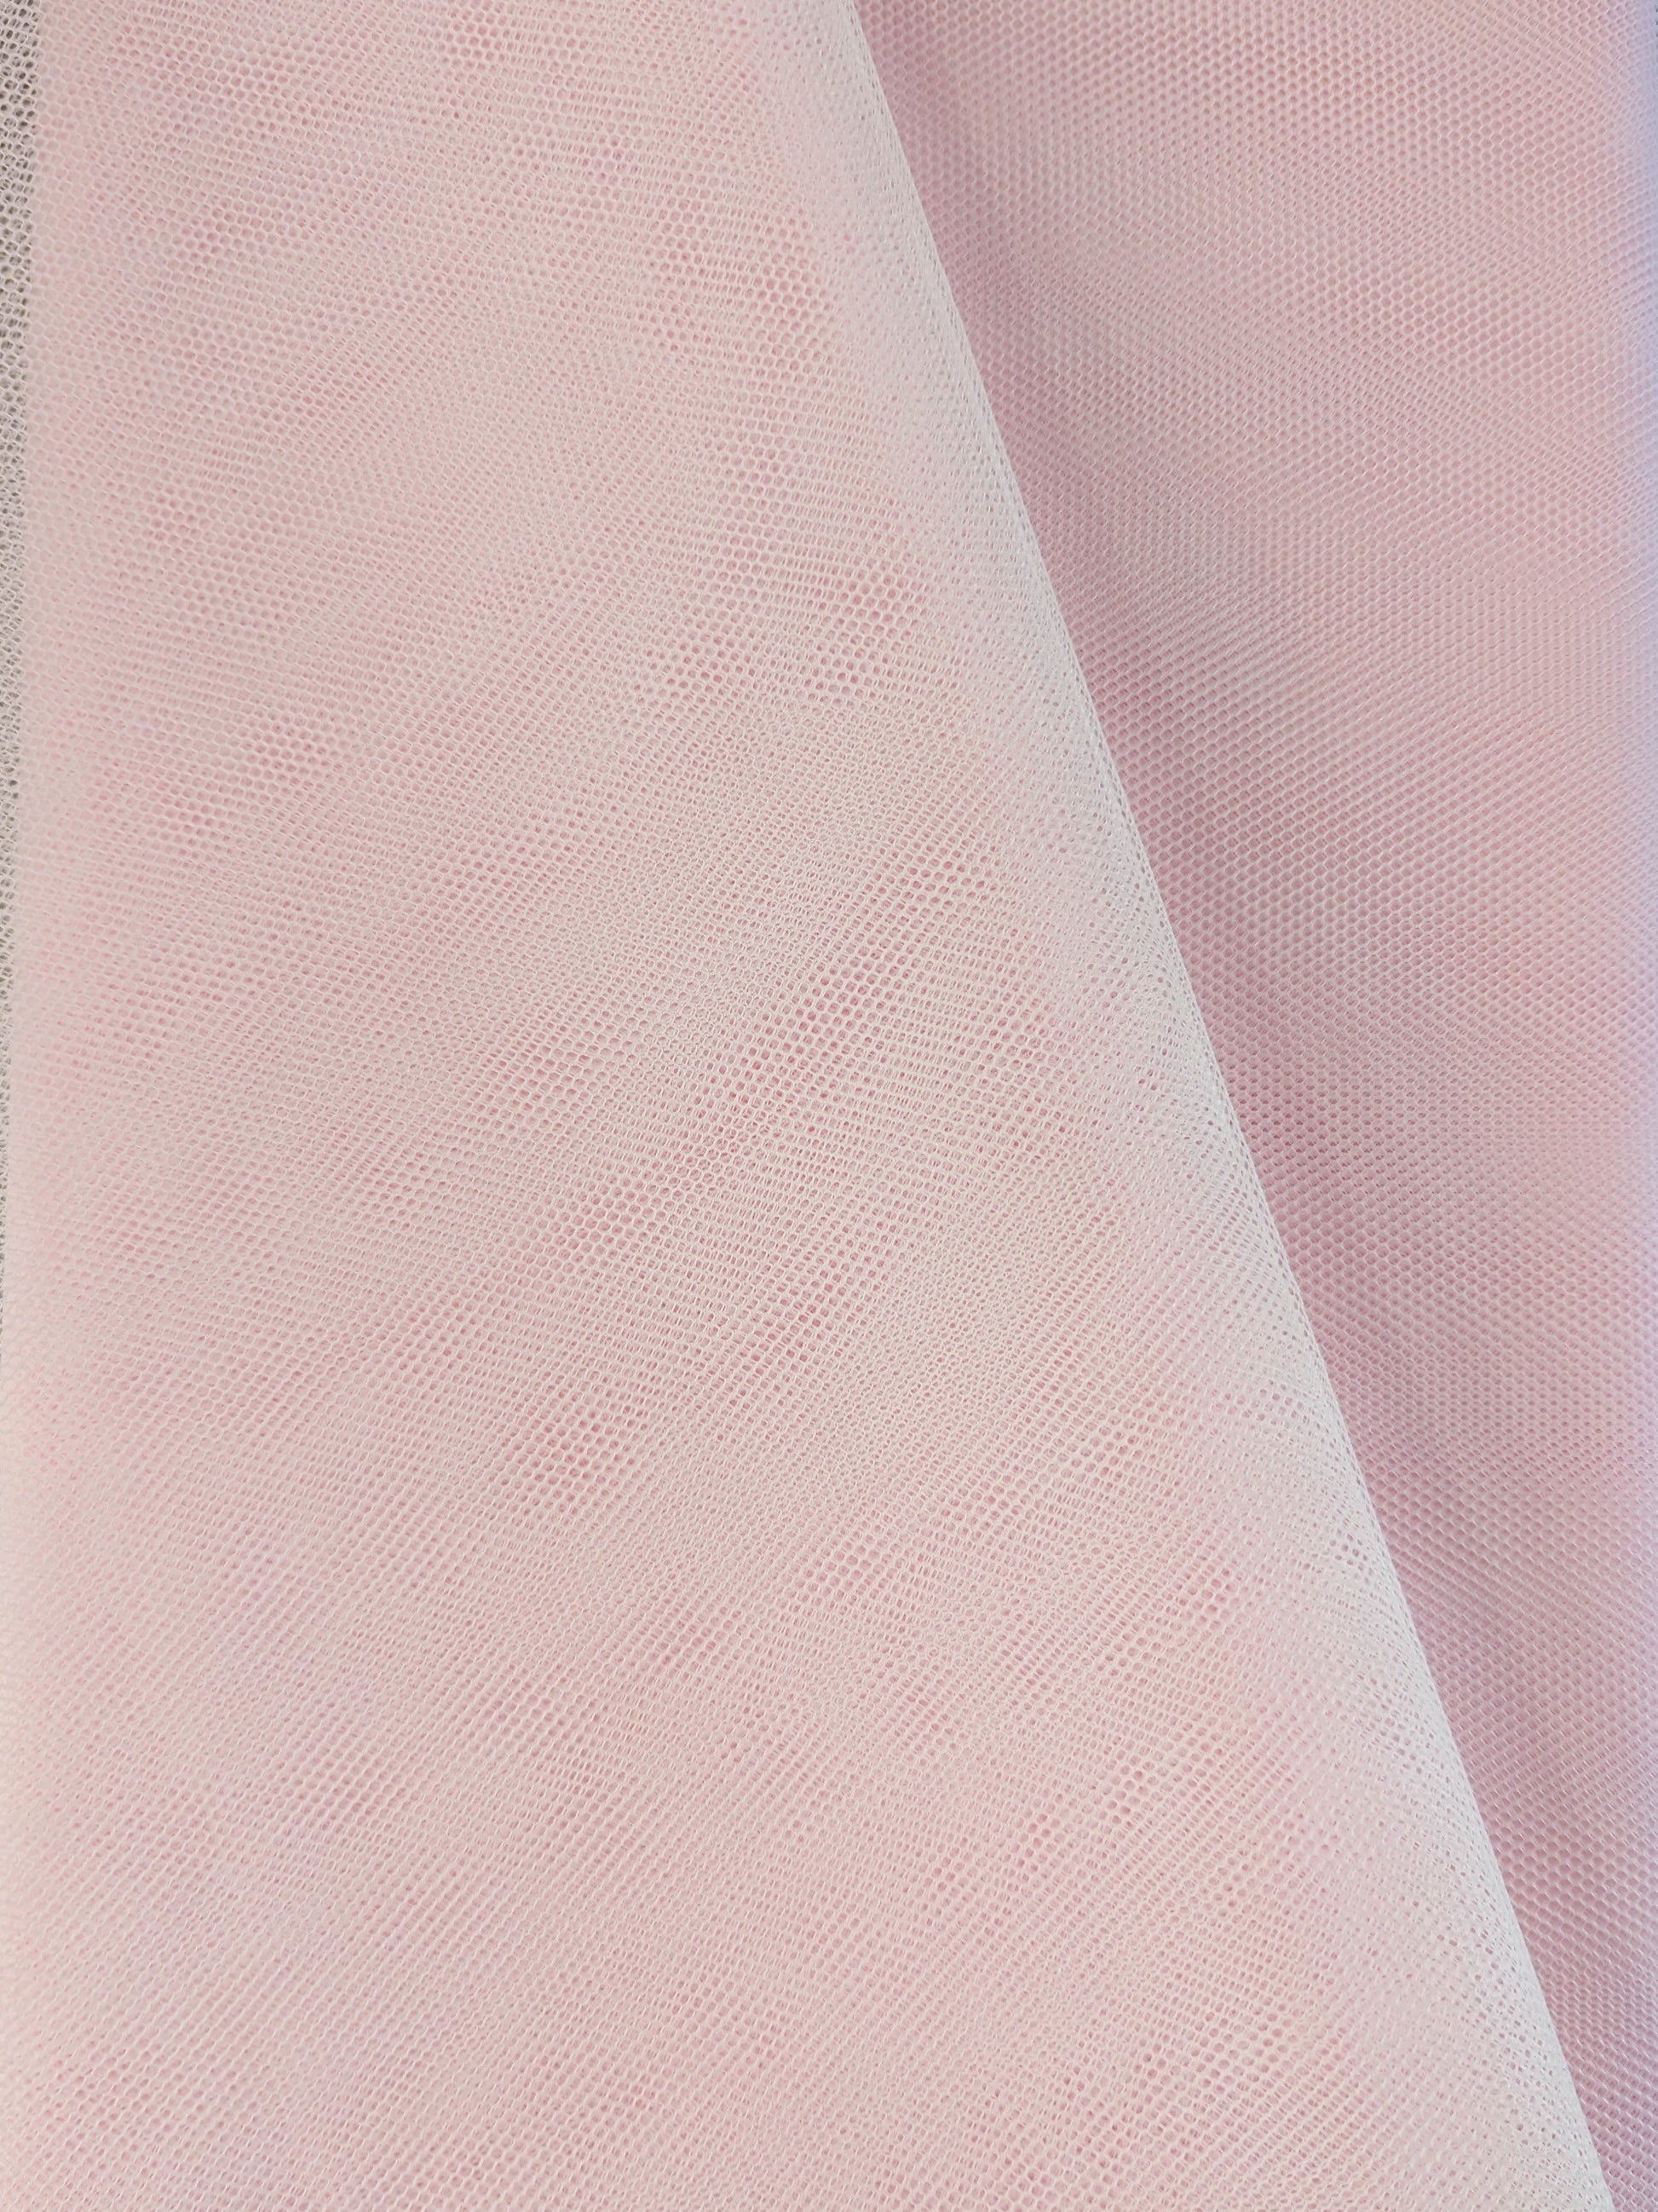 Nylon Tutu Net - Baby Pink - Dazzle Me Dancewear